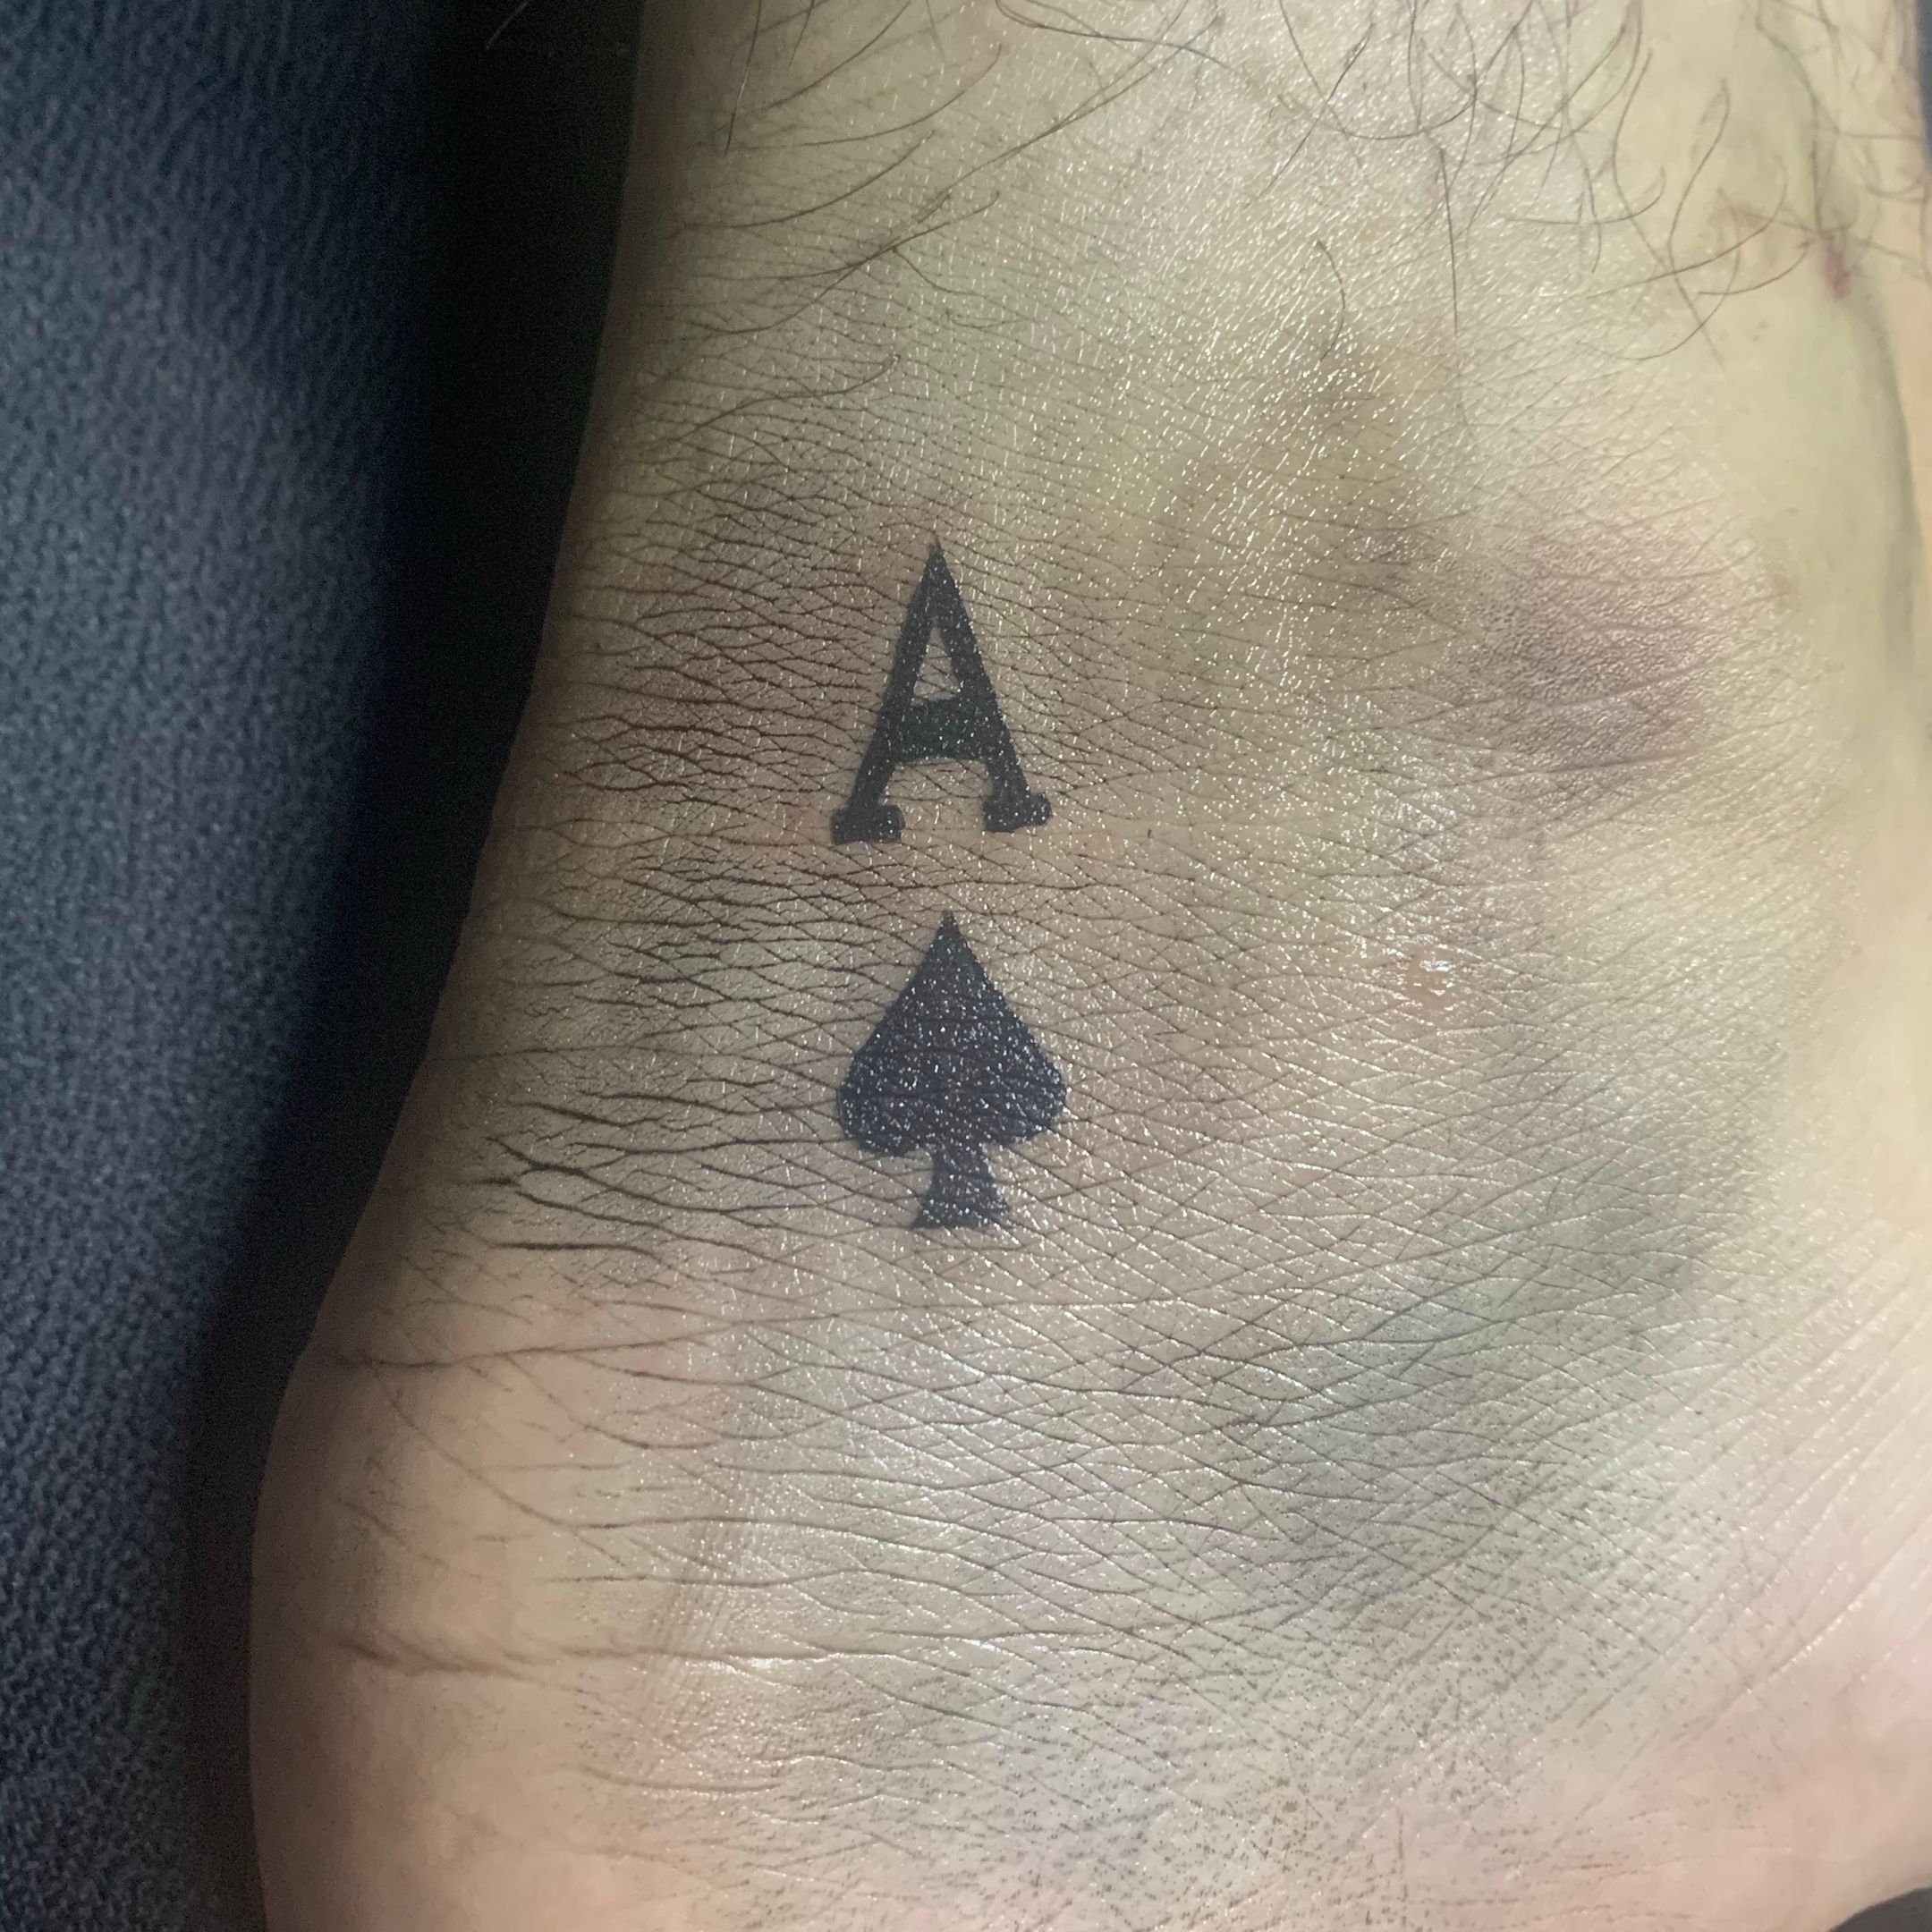 ace one piece tattoo | Pieces tattoo, One piece tattoos, Small hand tattoos